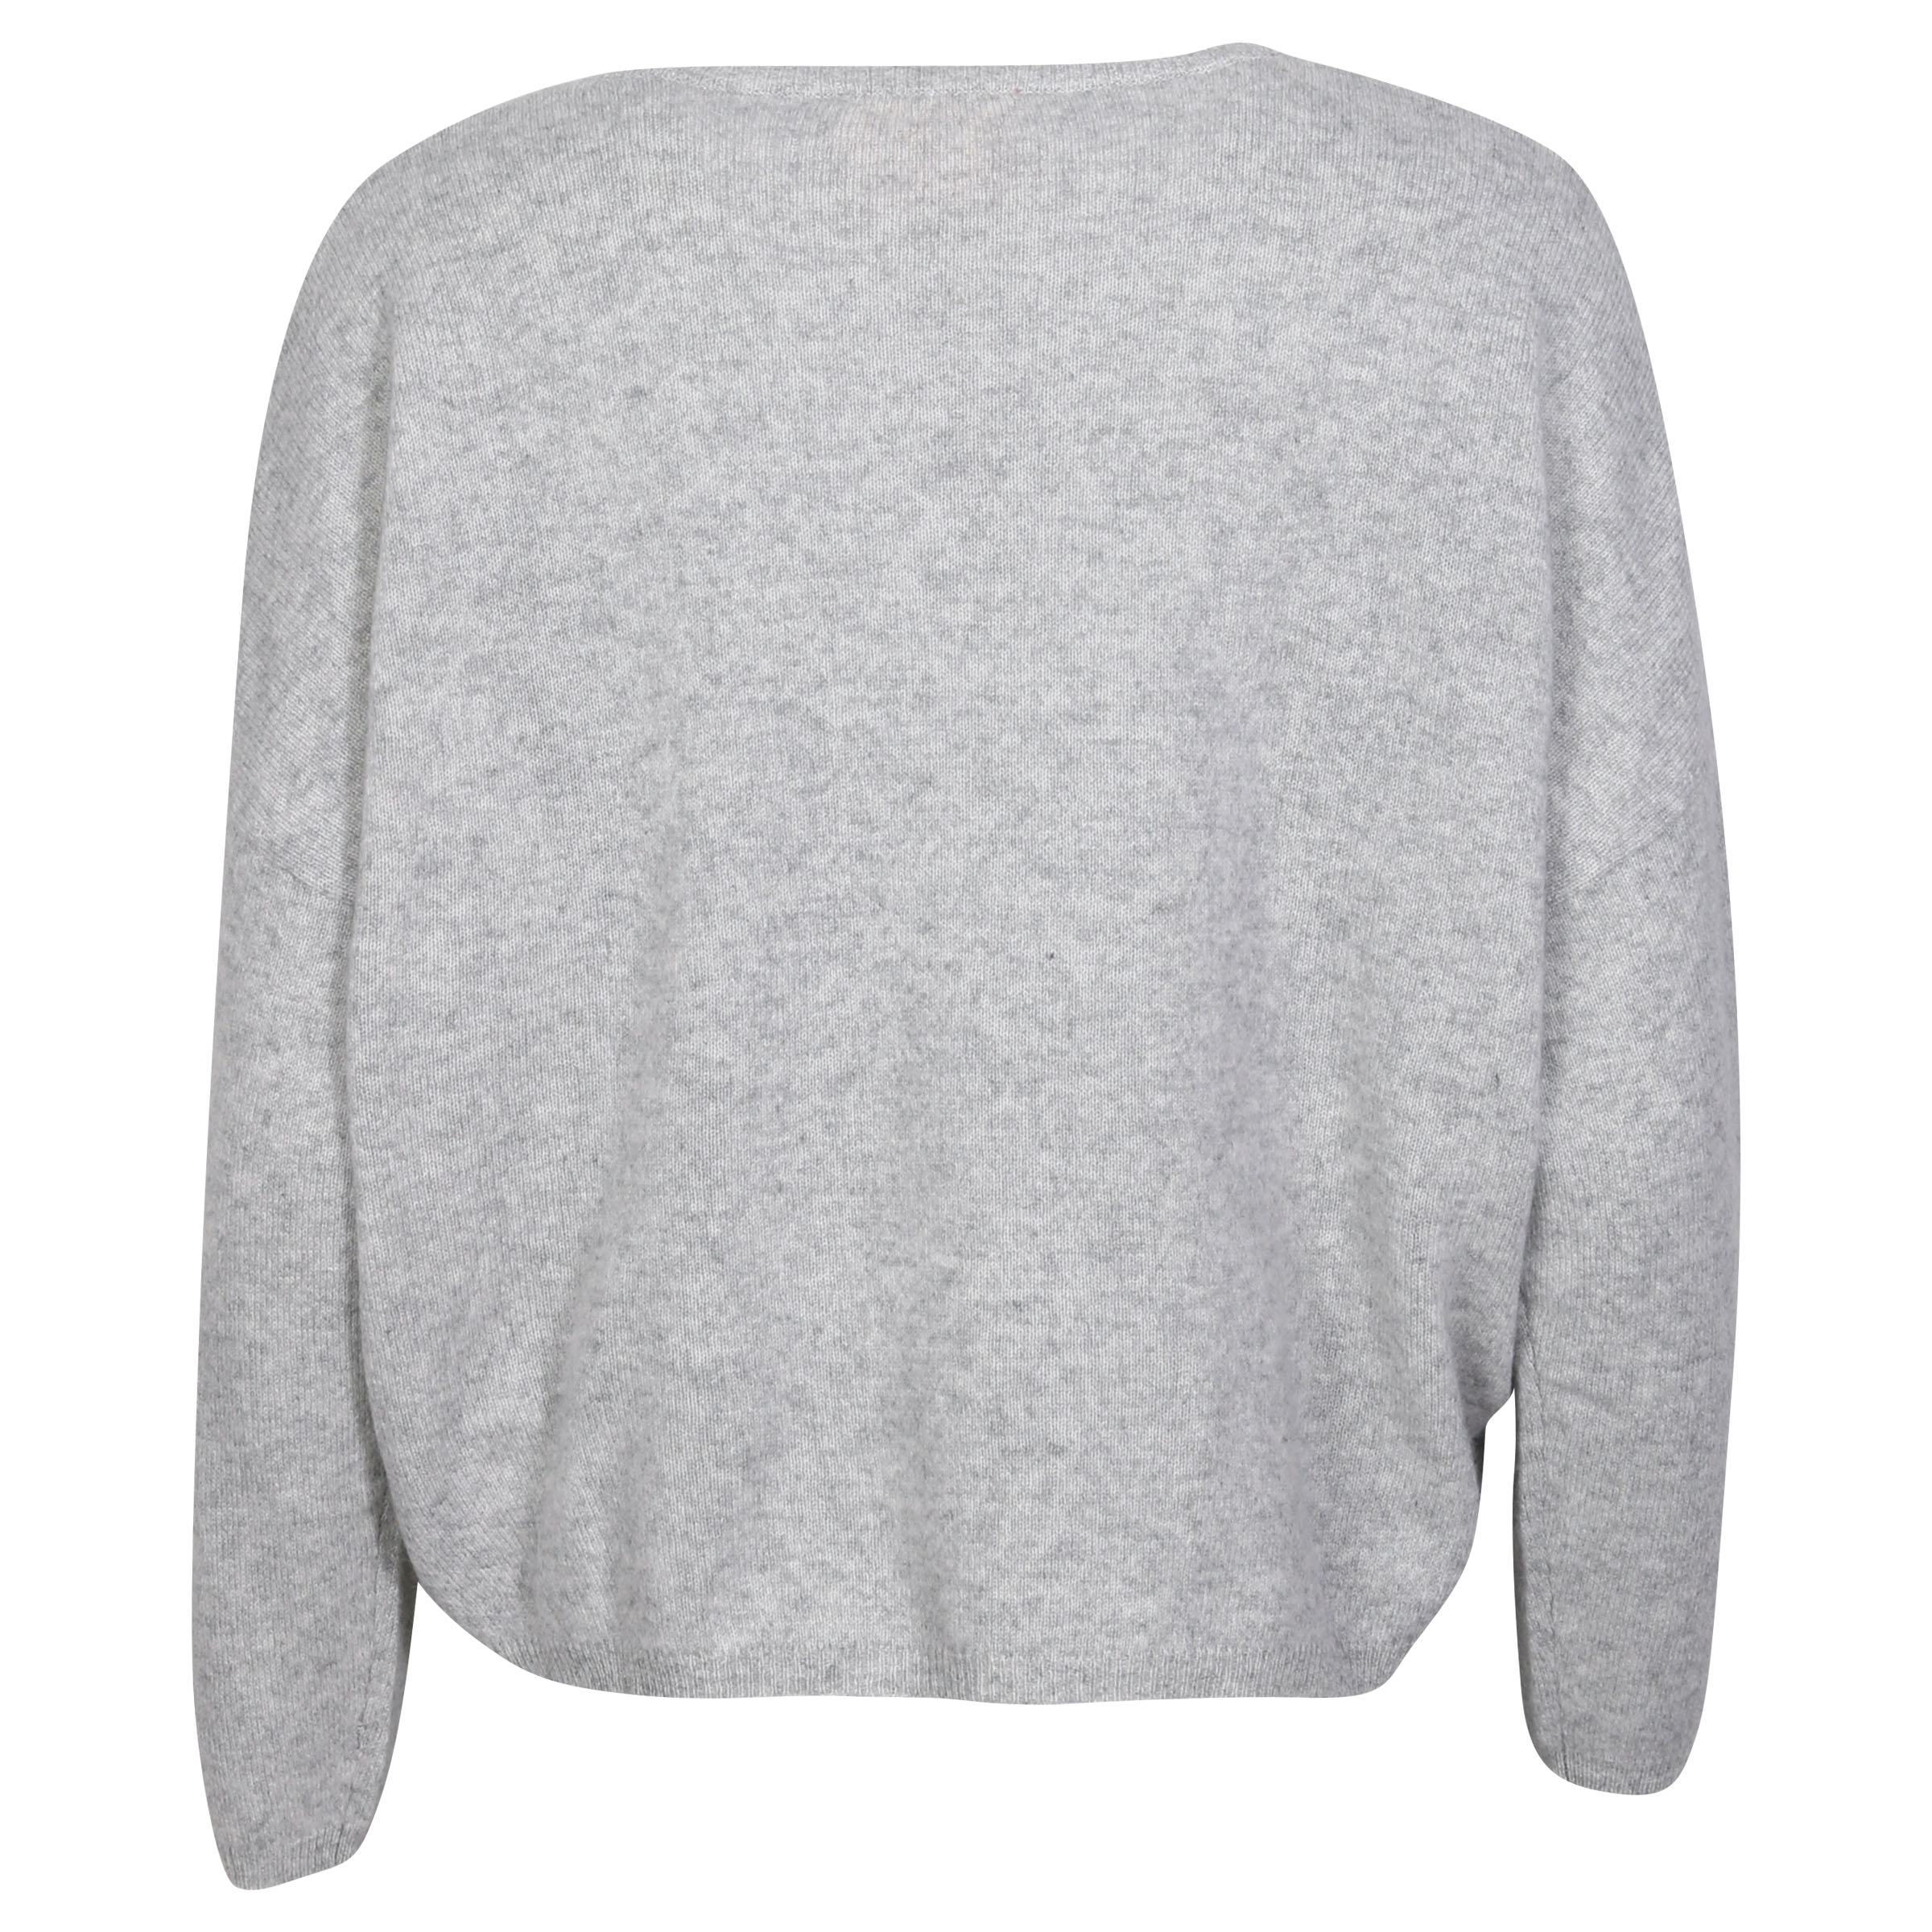 Absolut Cashmere Oversized Sweater Light Grey Melange M